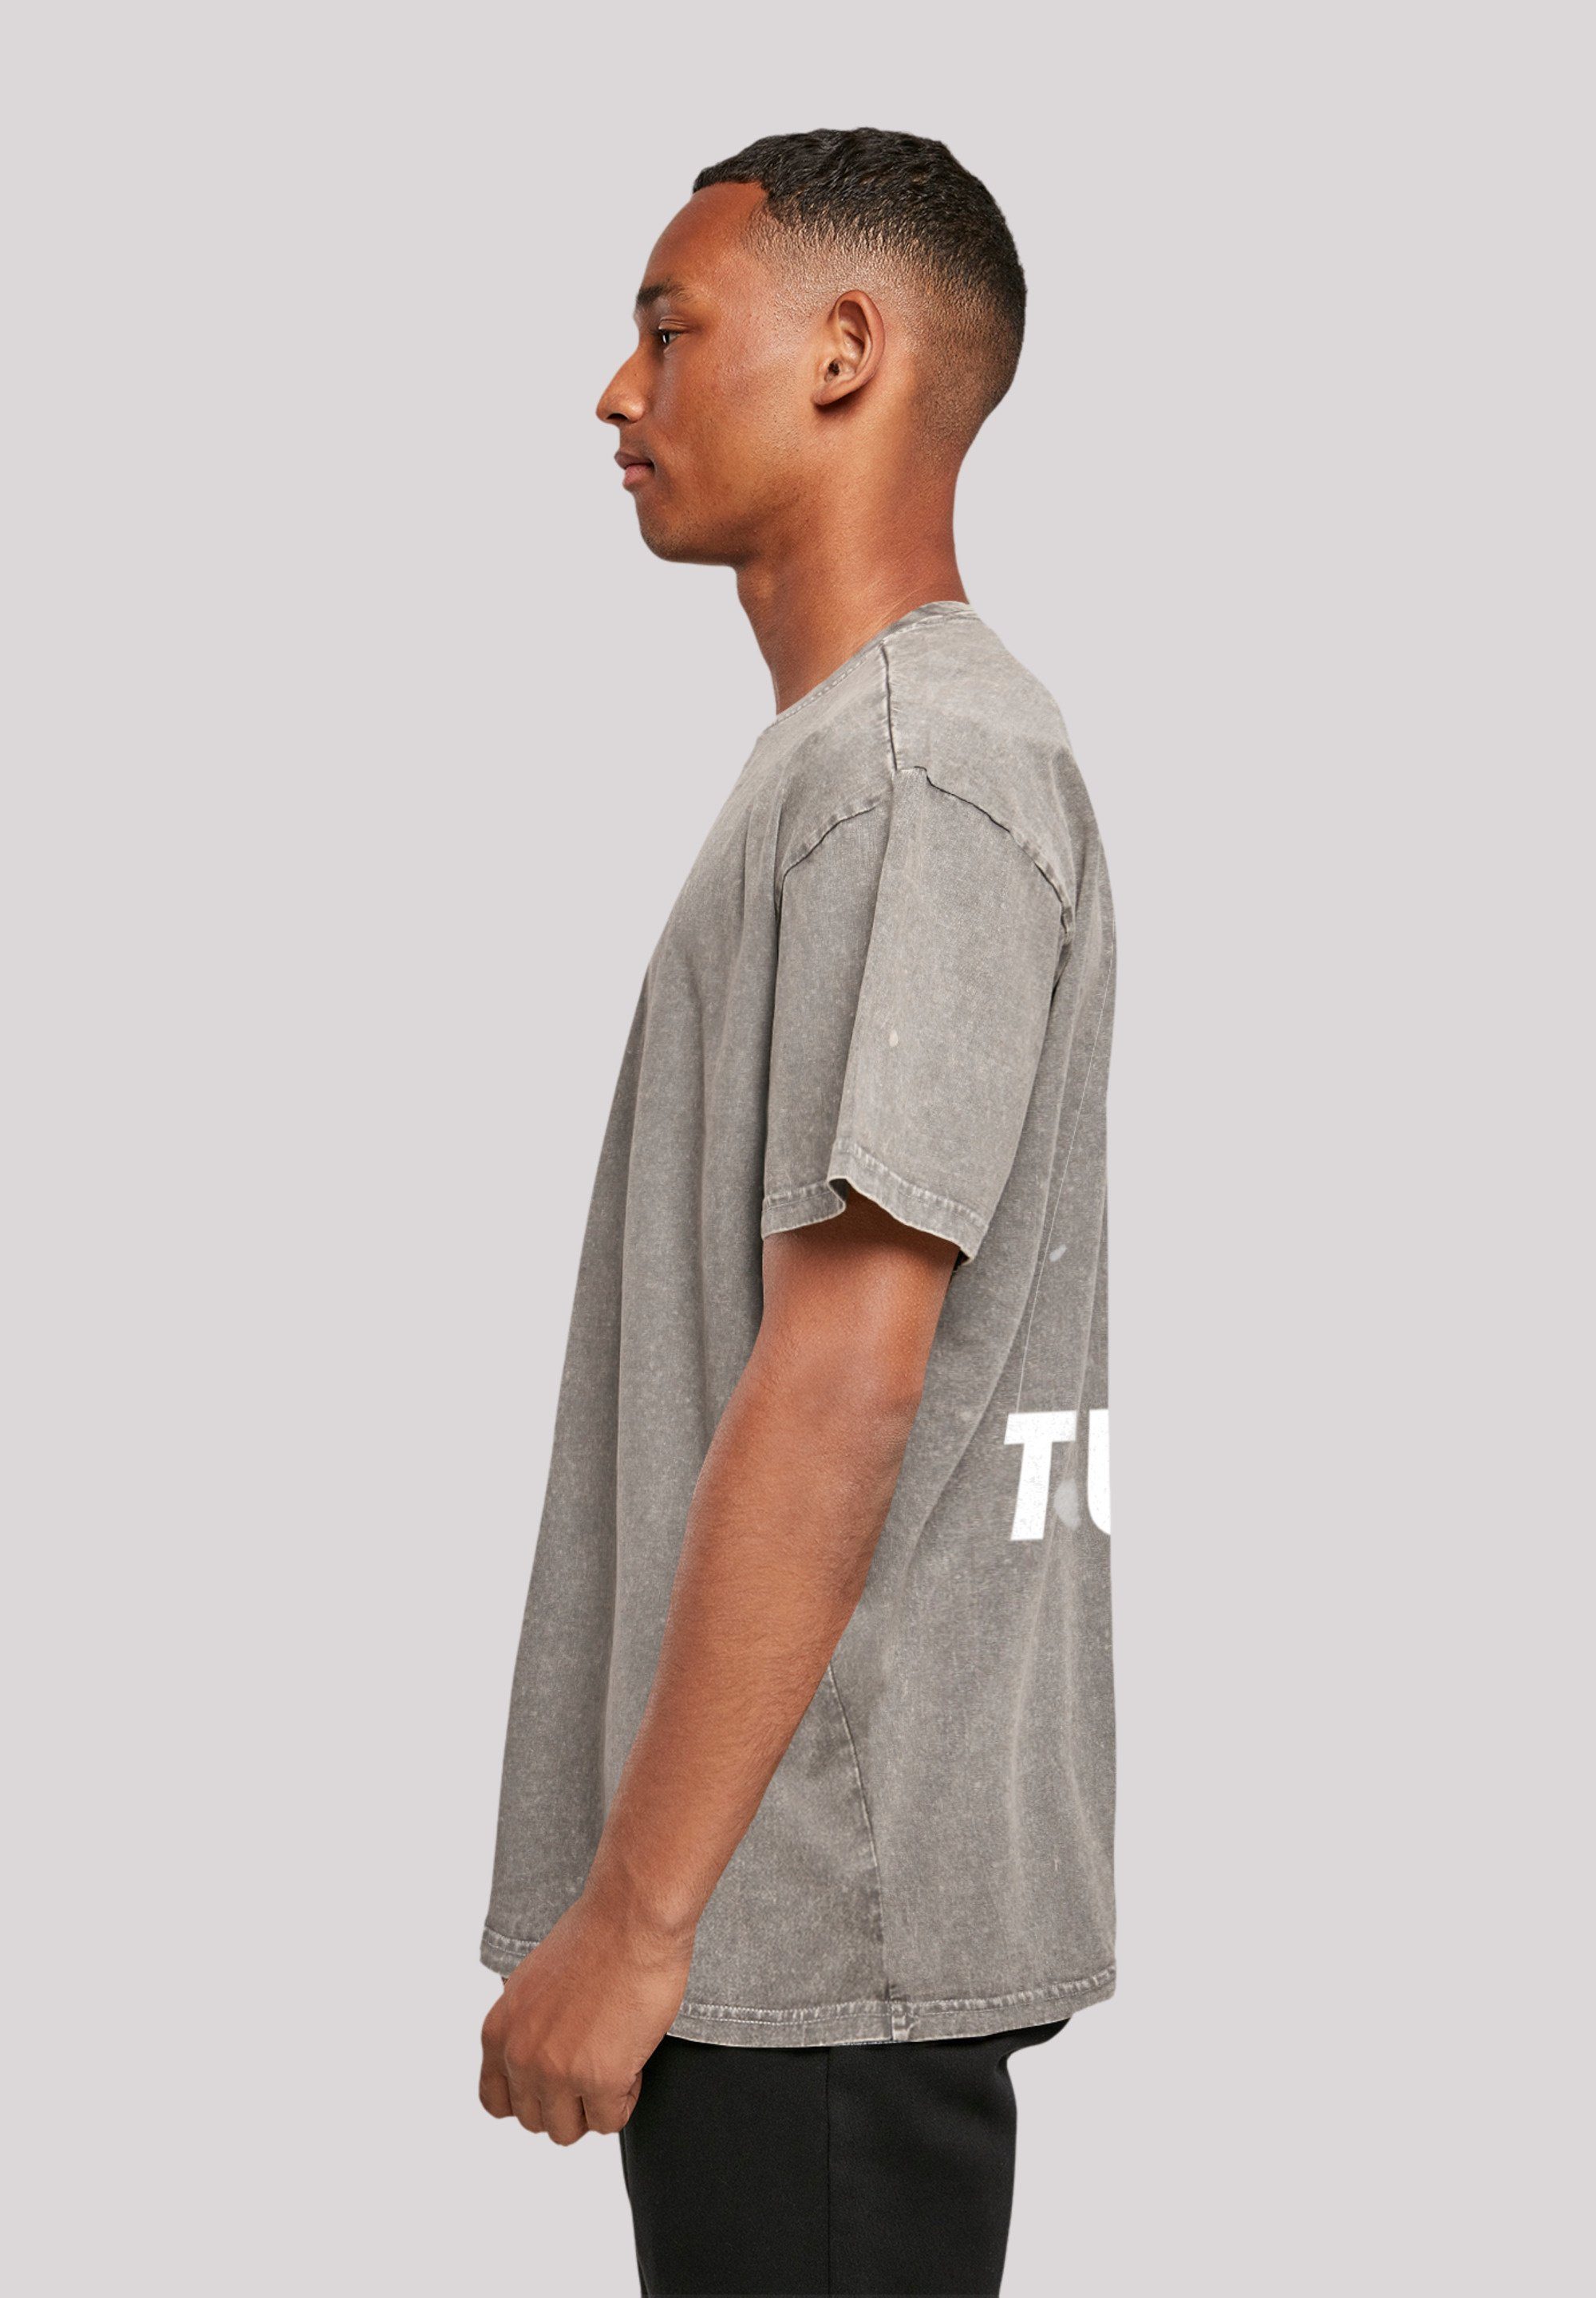 Tupac Praying Asphalt T-Shirt Print Shakur F4NT4STIC